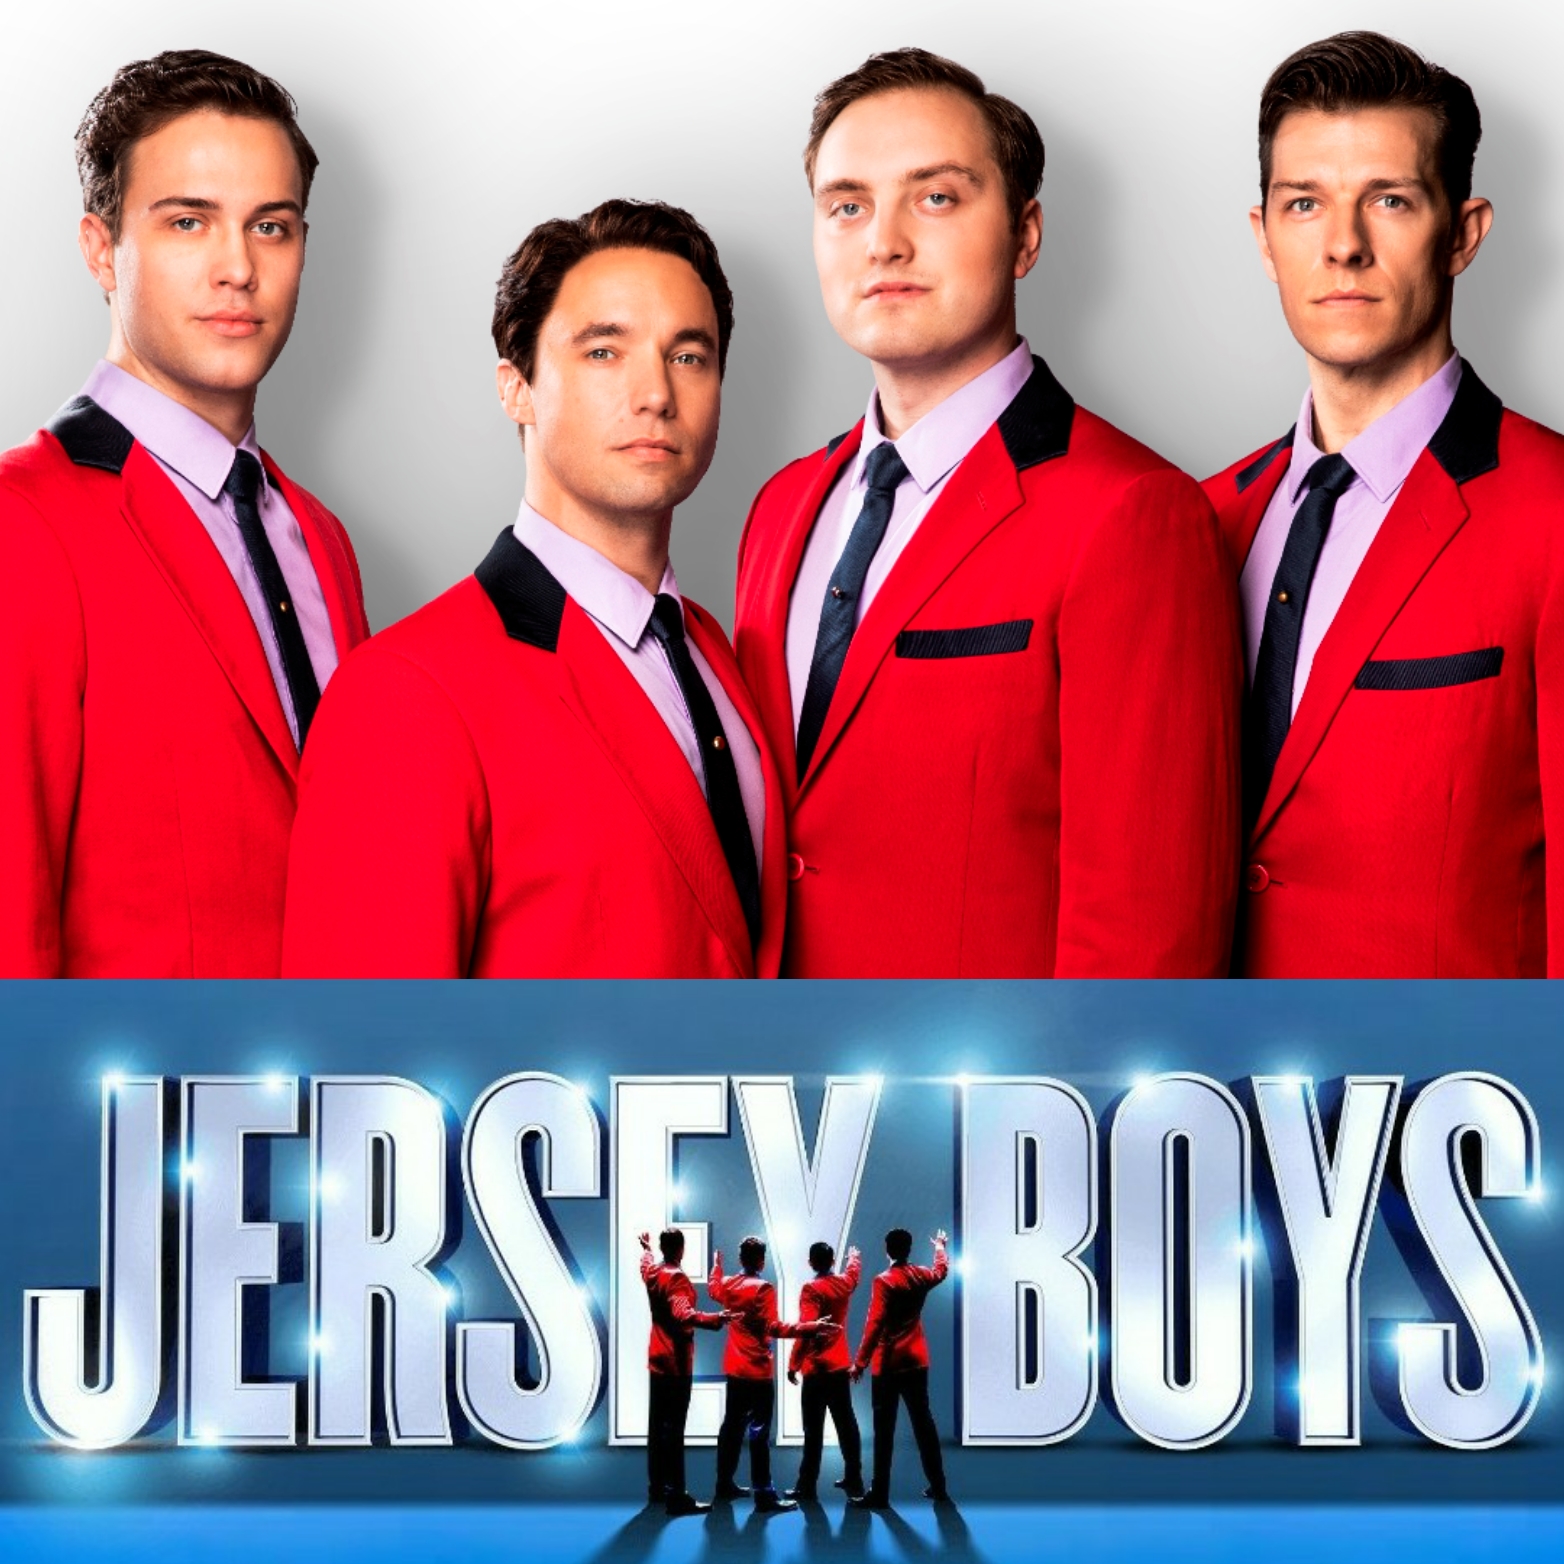 JERSEY BOYS UK & IRELAND TOUR CAST ANNOUNCED Theatre Fan